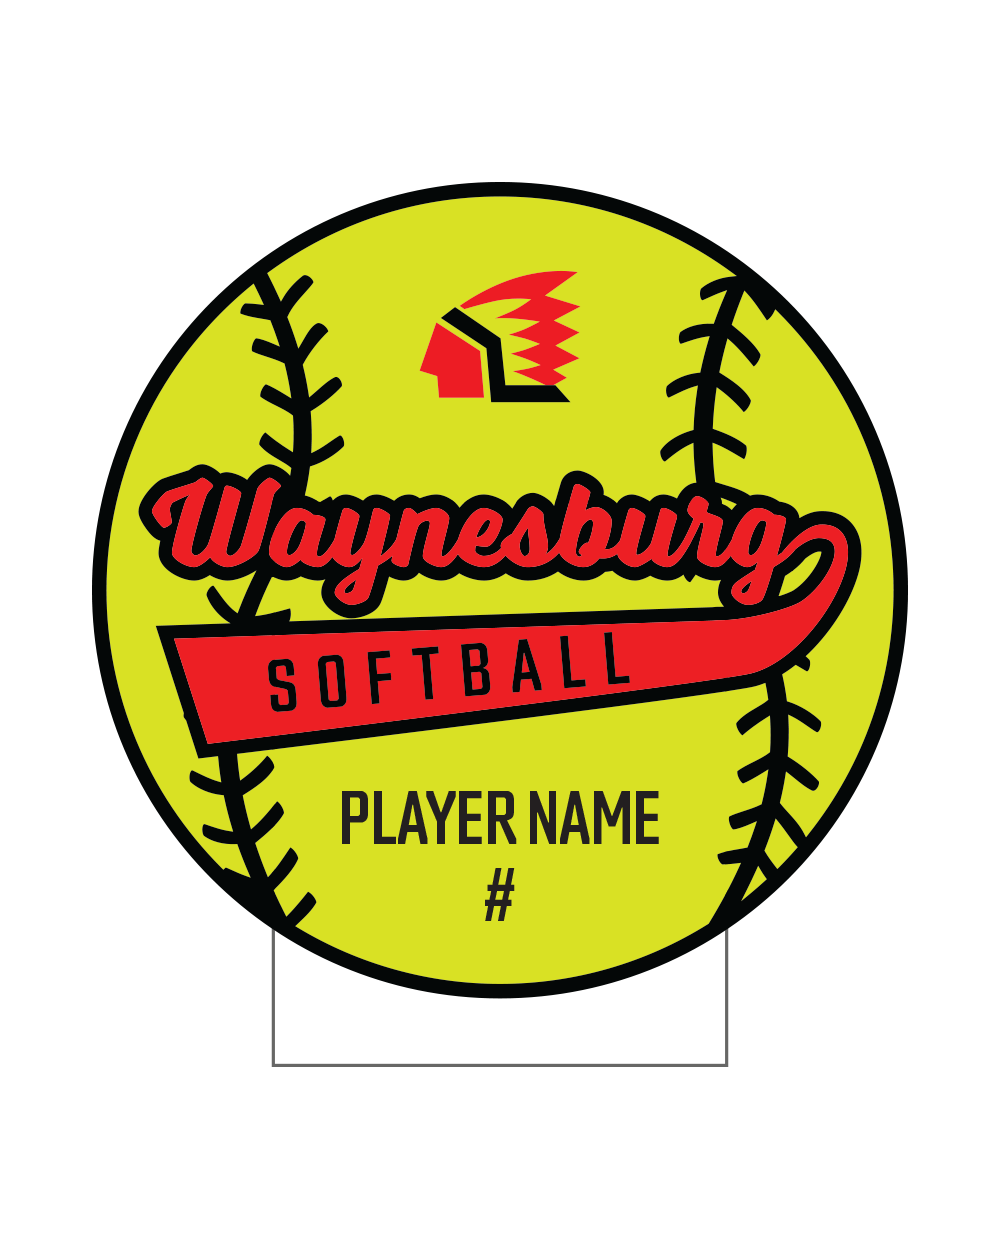 Waynesburg Girls Softball Association Yard Sign